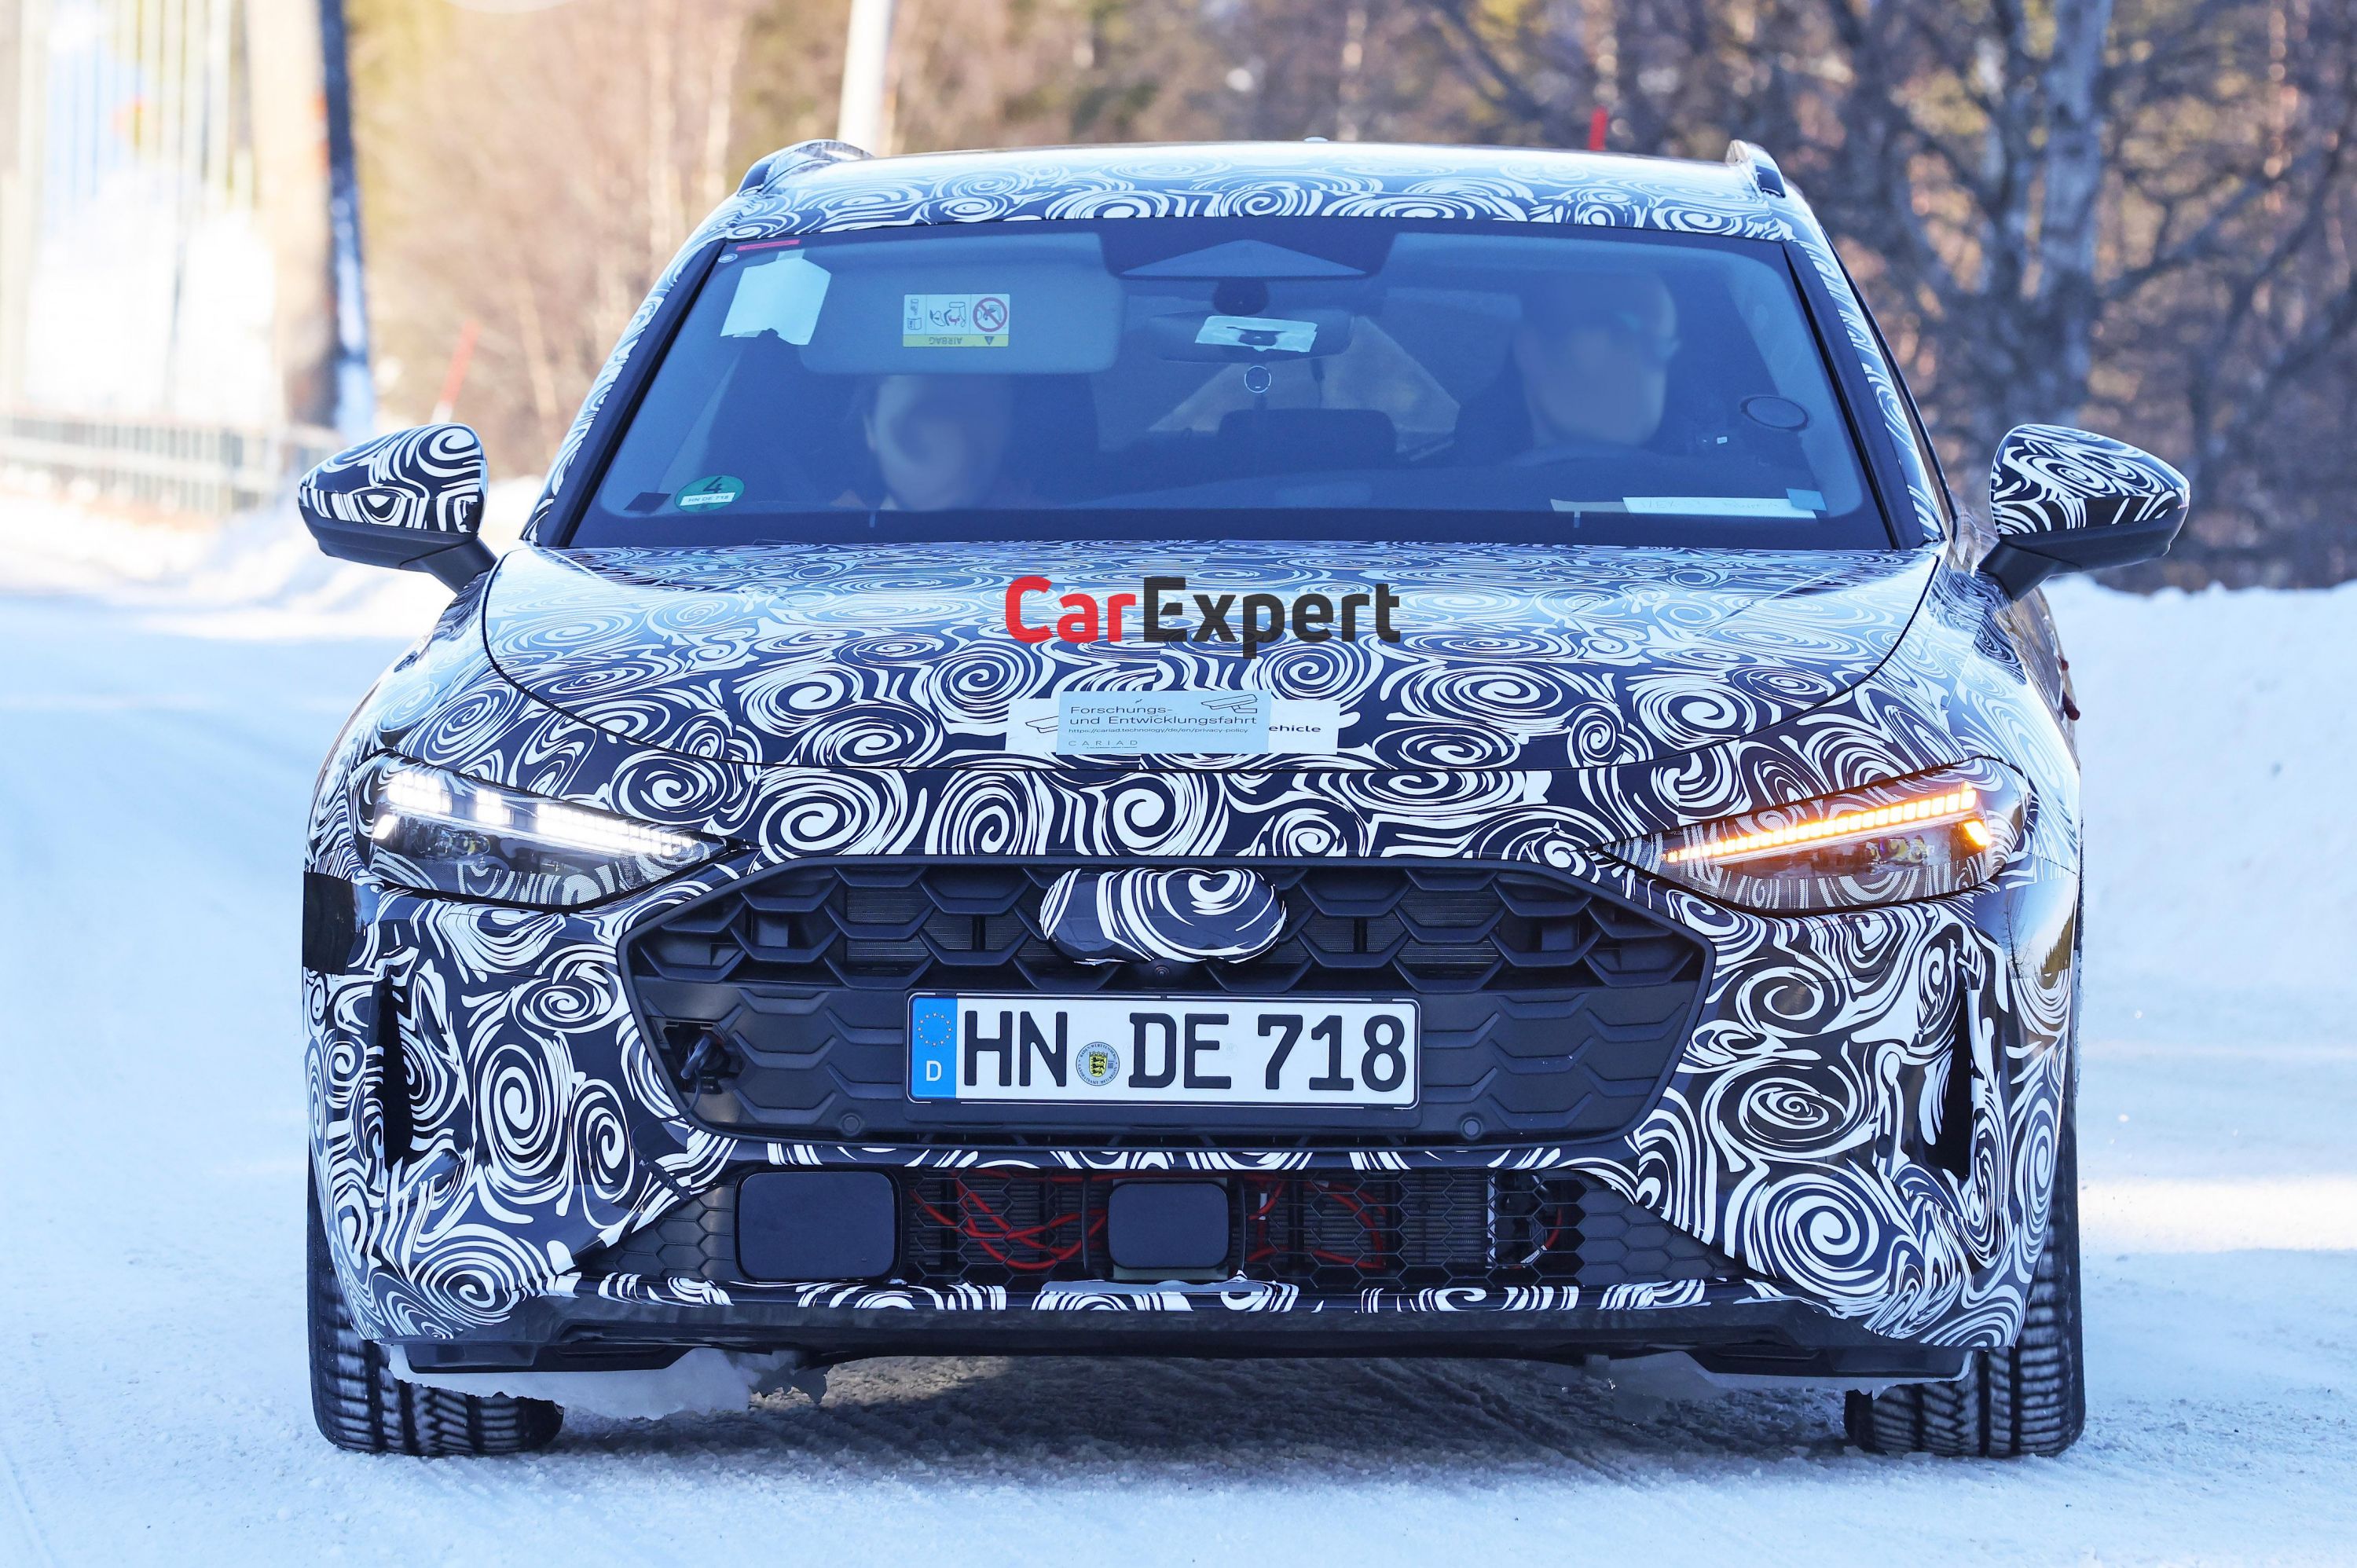 2024 Audi A5 Unveiled: A New Generation AUDI Sportback !! 